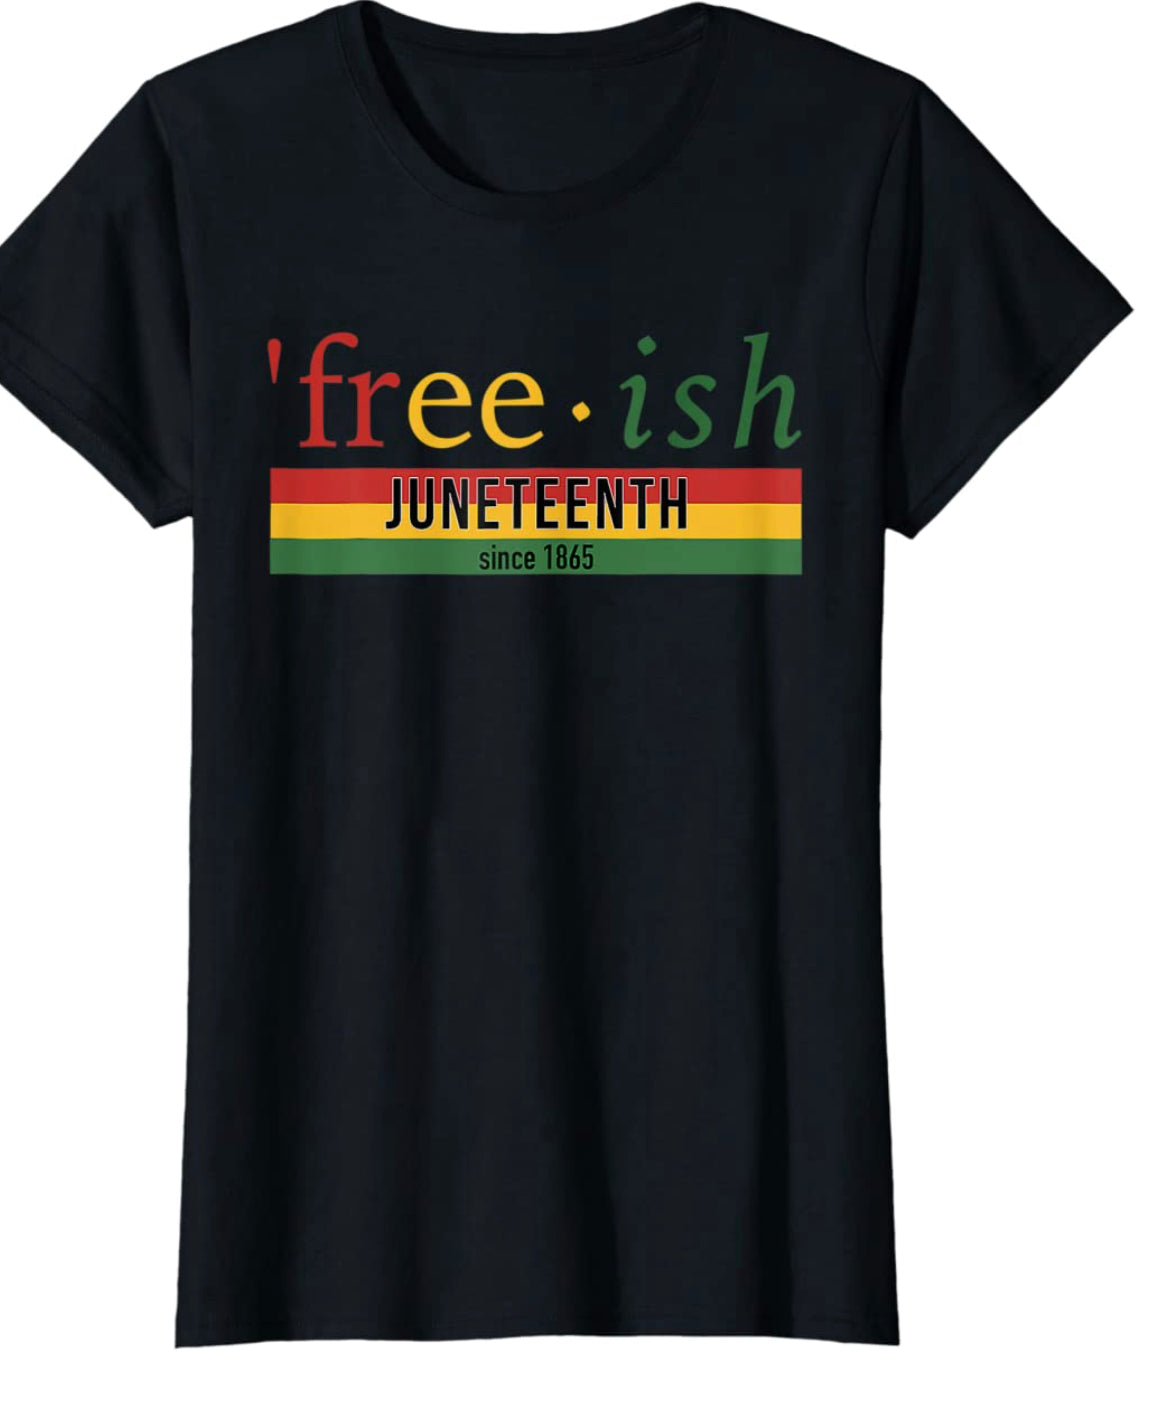 Final Sale Plus Size "Free-ish Since 1865" Juneteenth T-Shirt in Black